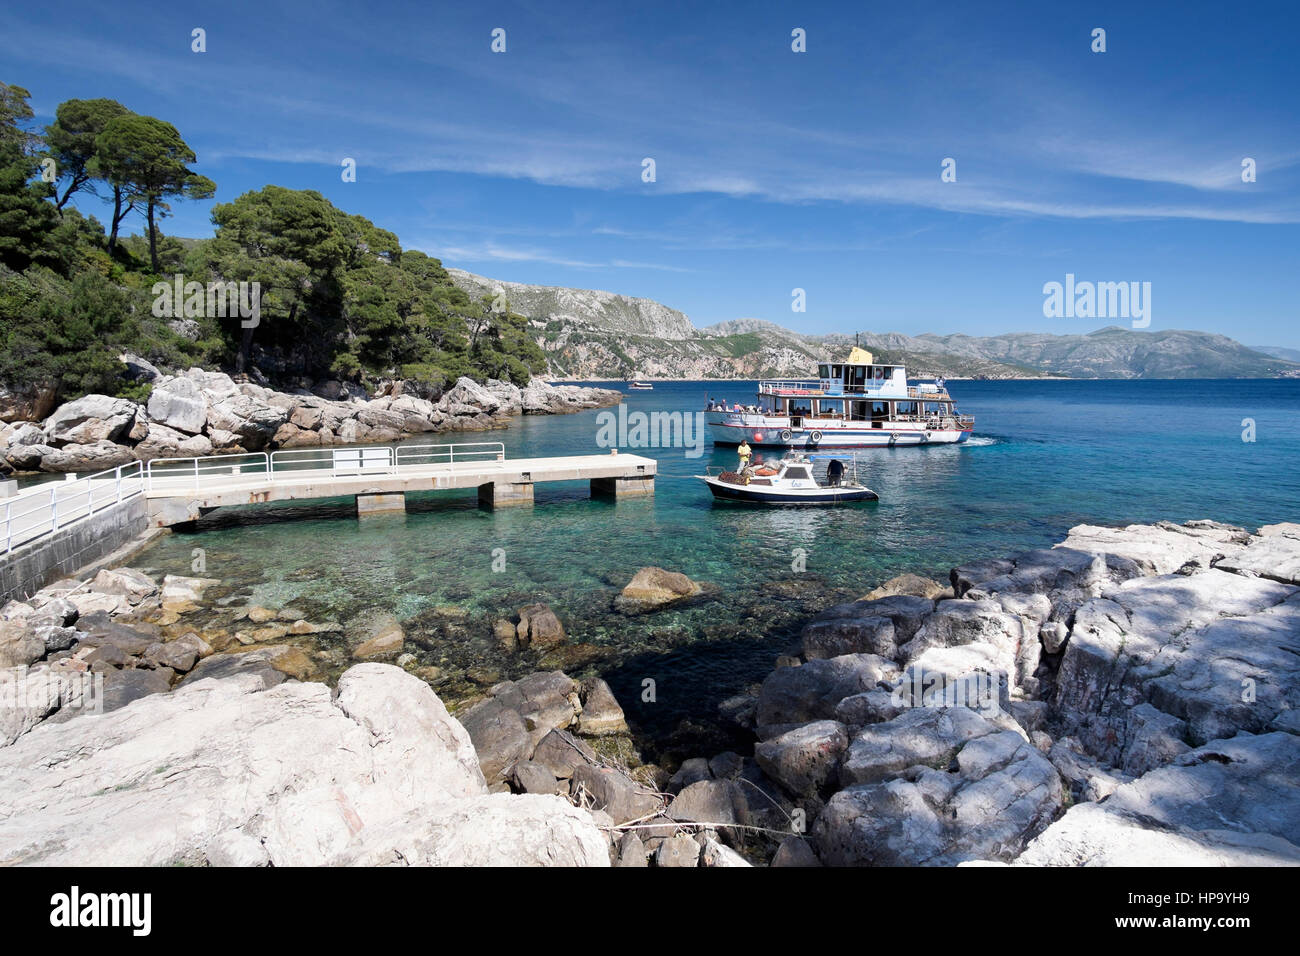 A passenger ferry arrives at the dock on Lokrum Island, near Dubrovnik, Croatia Stock Photo